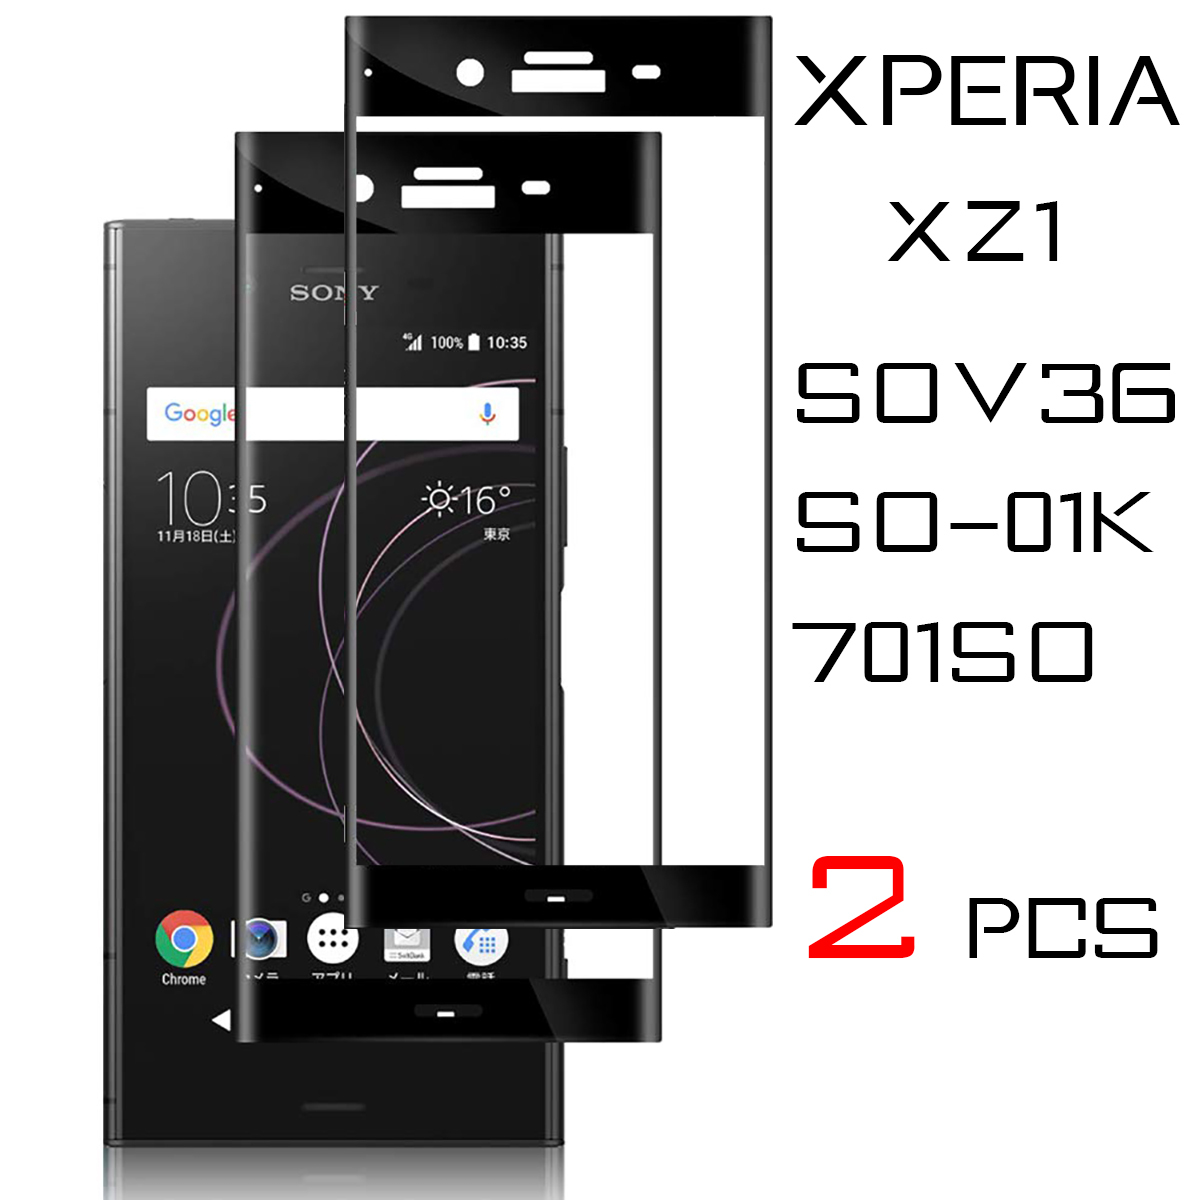 XPERIA XZ1 SOV36 SO-01K 701SO 液晶保護フィルム エクスペリア 強化ガラス ブルーライトカット 9H 激安 送料無料 全面保護 ２枚セット_画像1